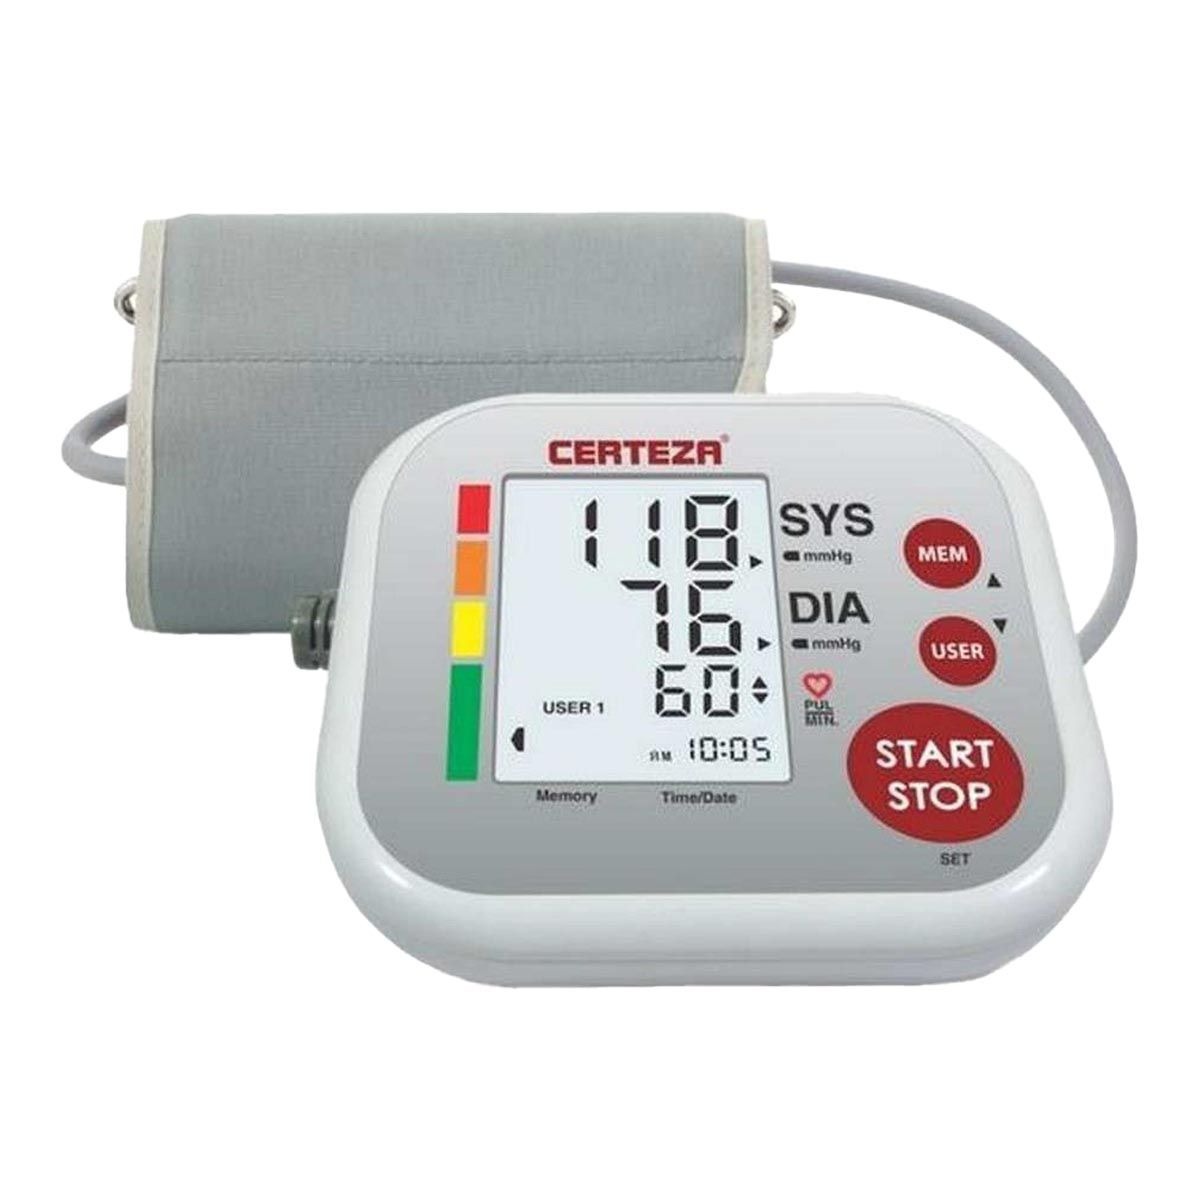 Certeza-BM-405-Digital-Blood-Pressure-Monitor